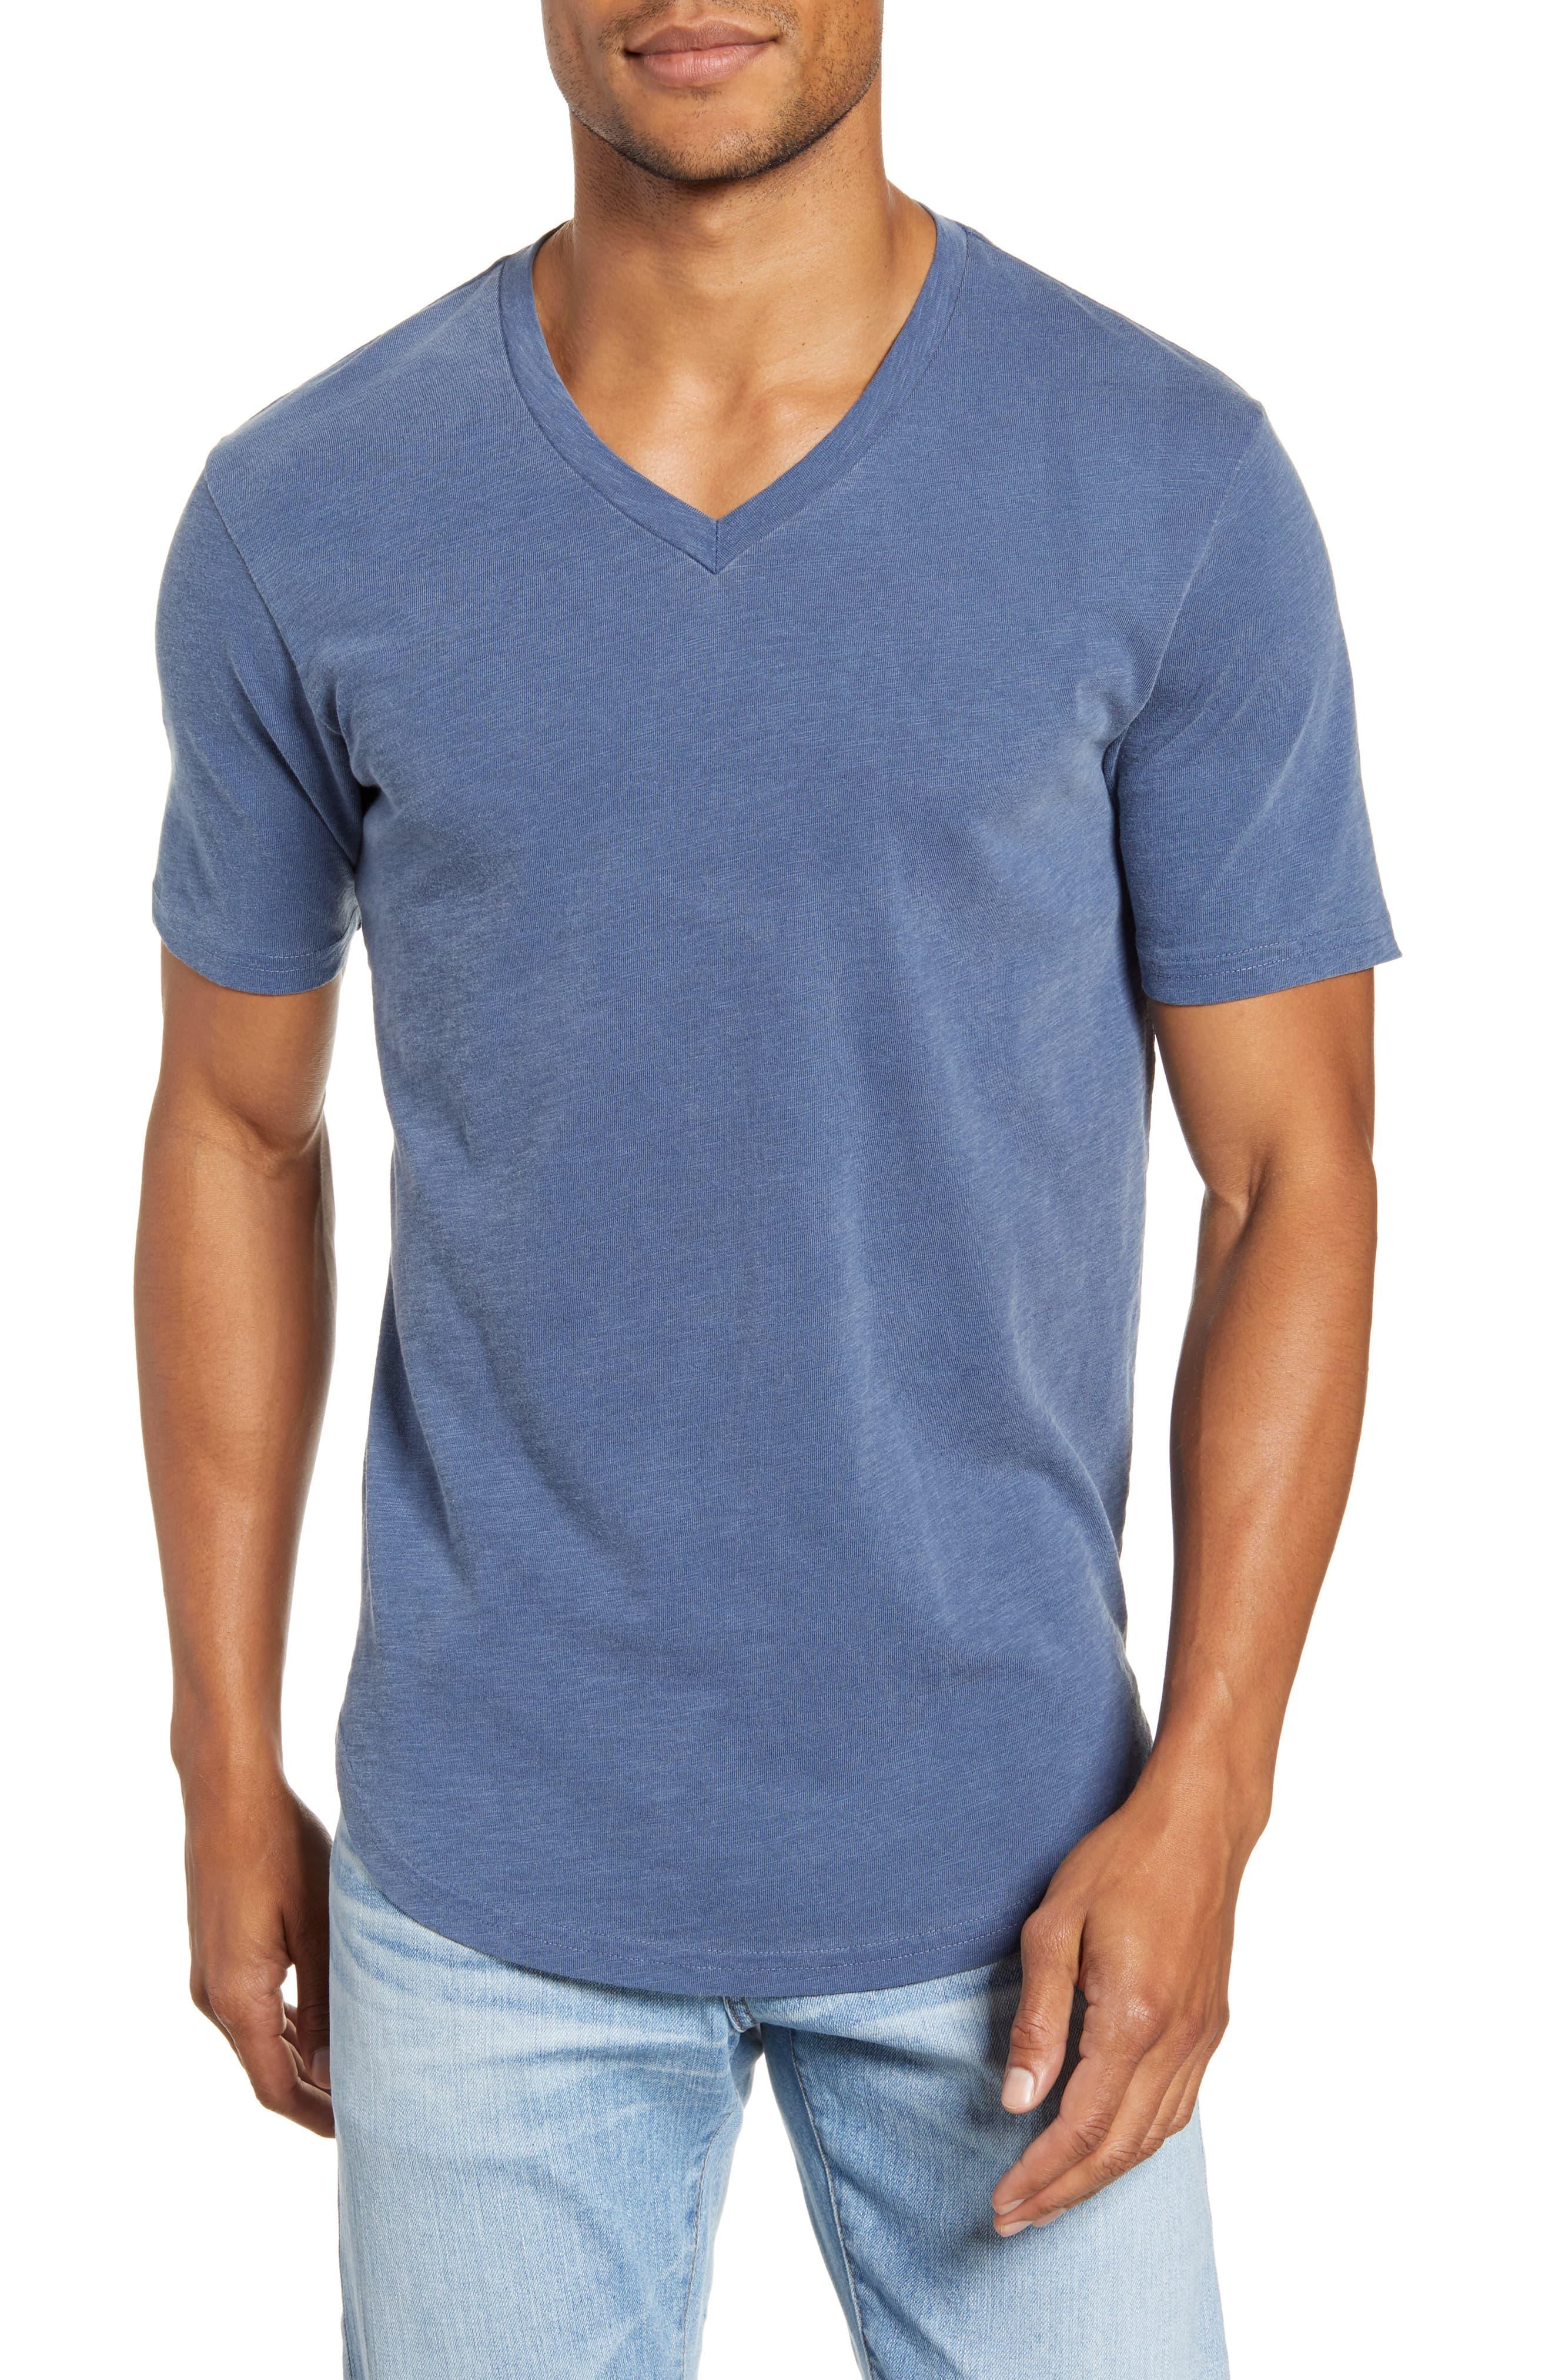 Goodlife Sun Faded Curved Hem Cotton Slub T-shirt in Blue for Men - Lyst